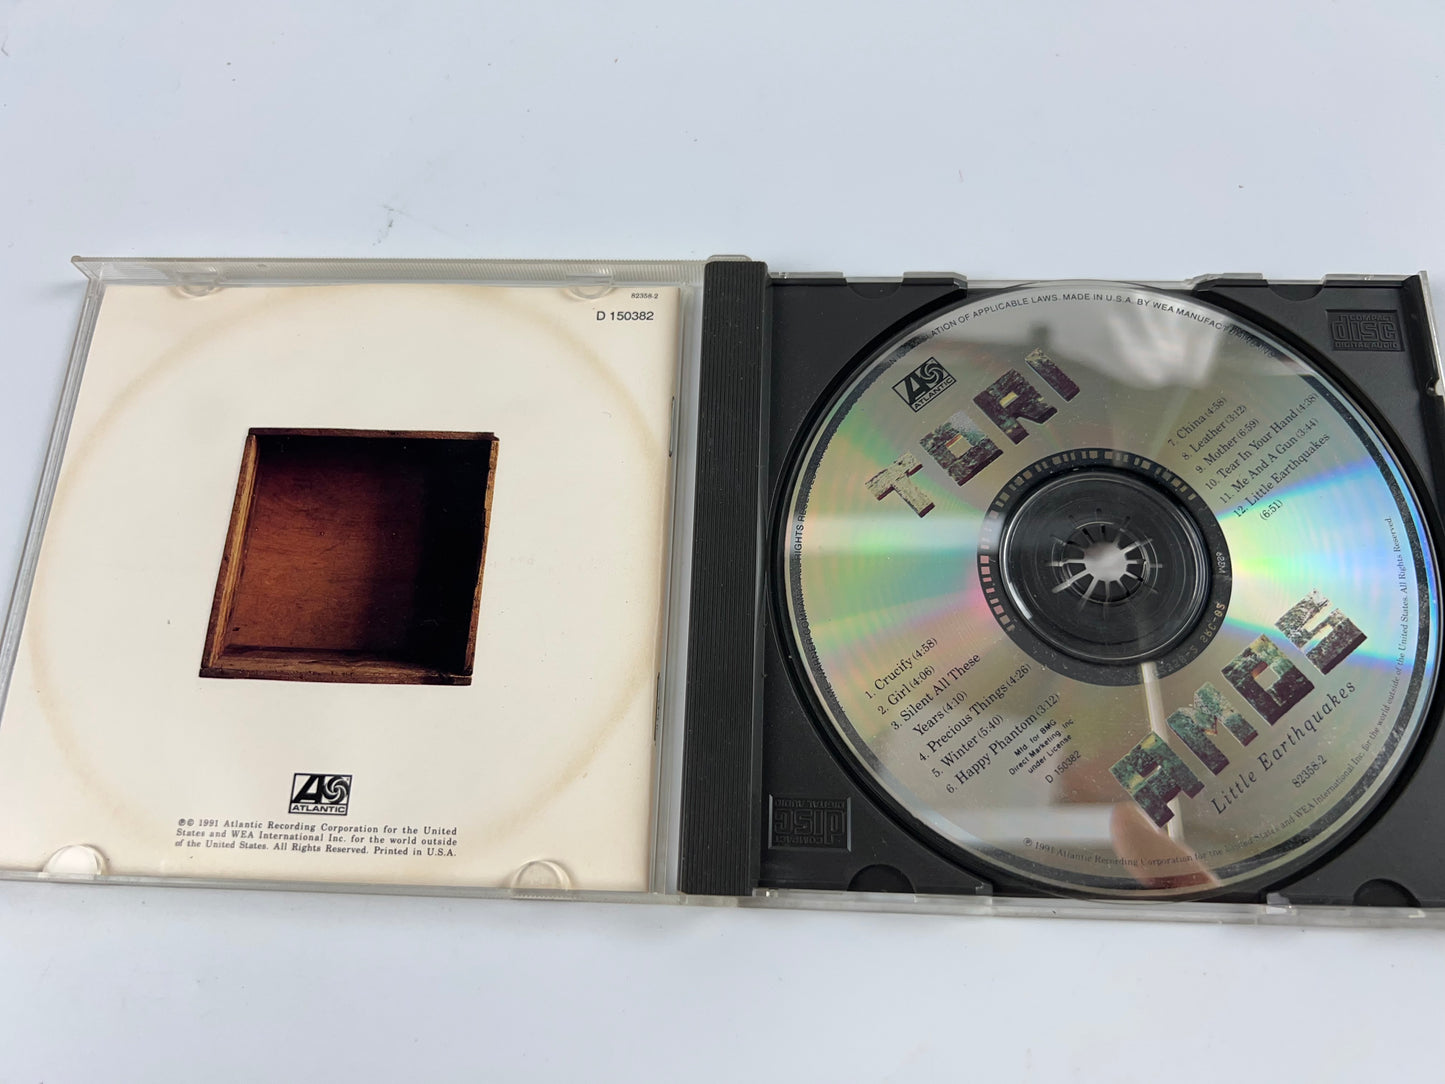 Tori Amos : Little Earthquakes CD (1992)